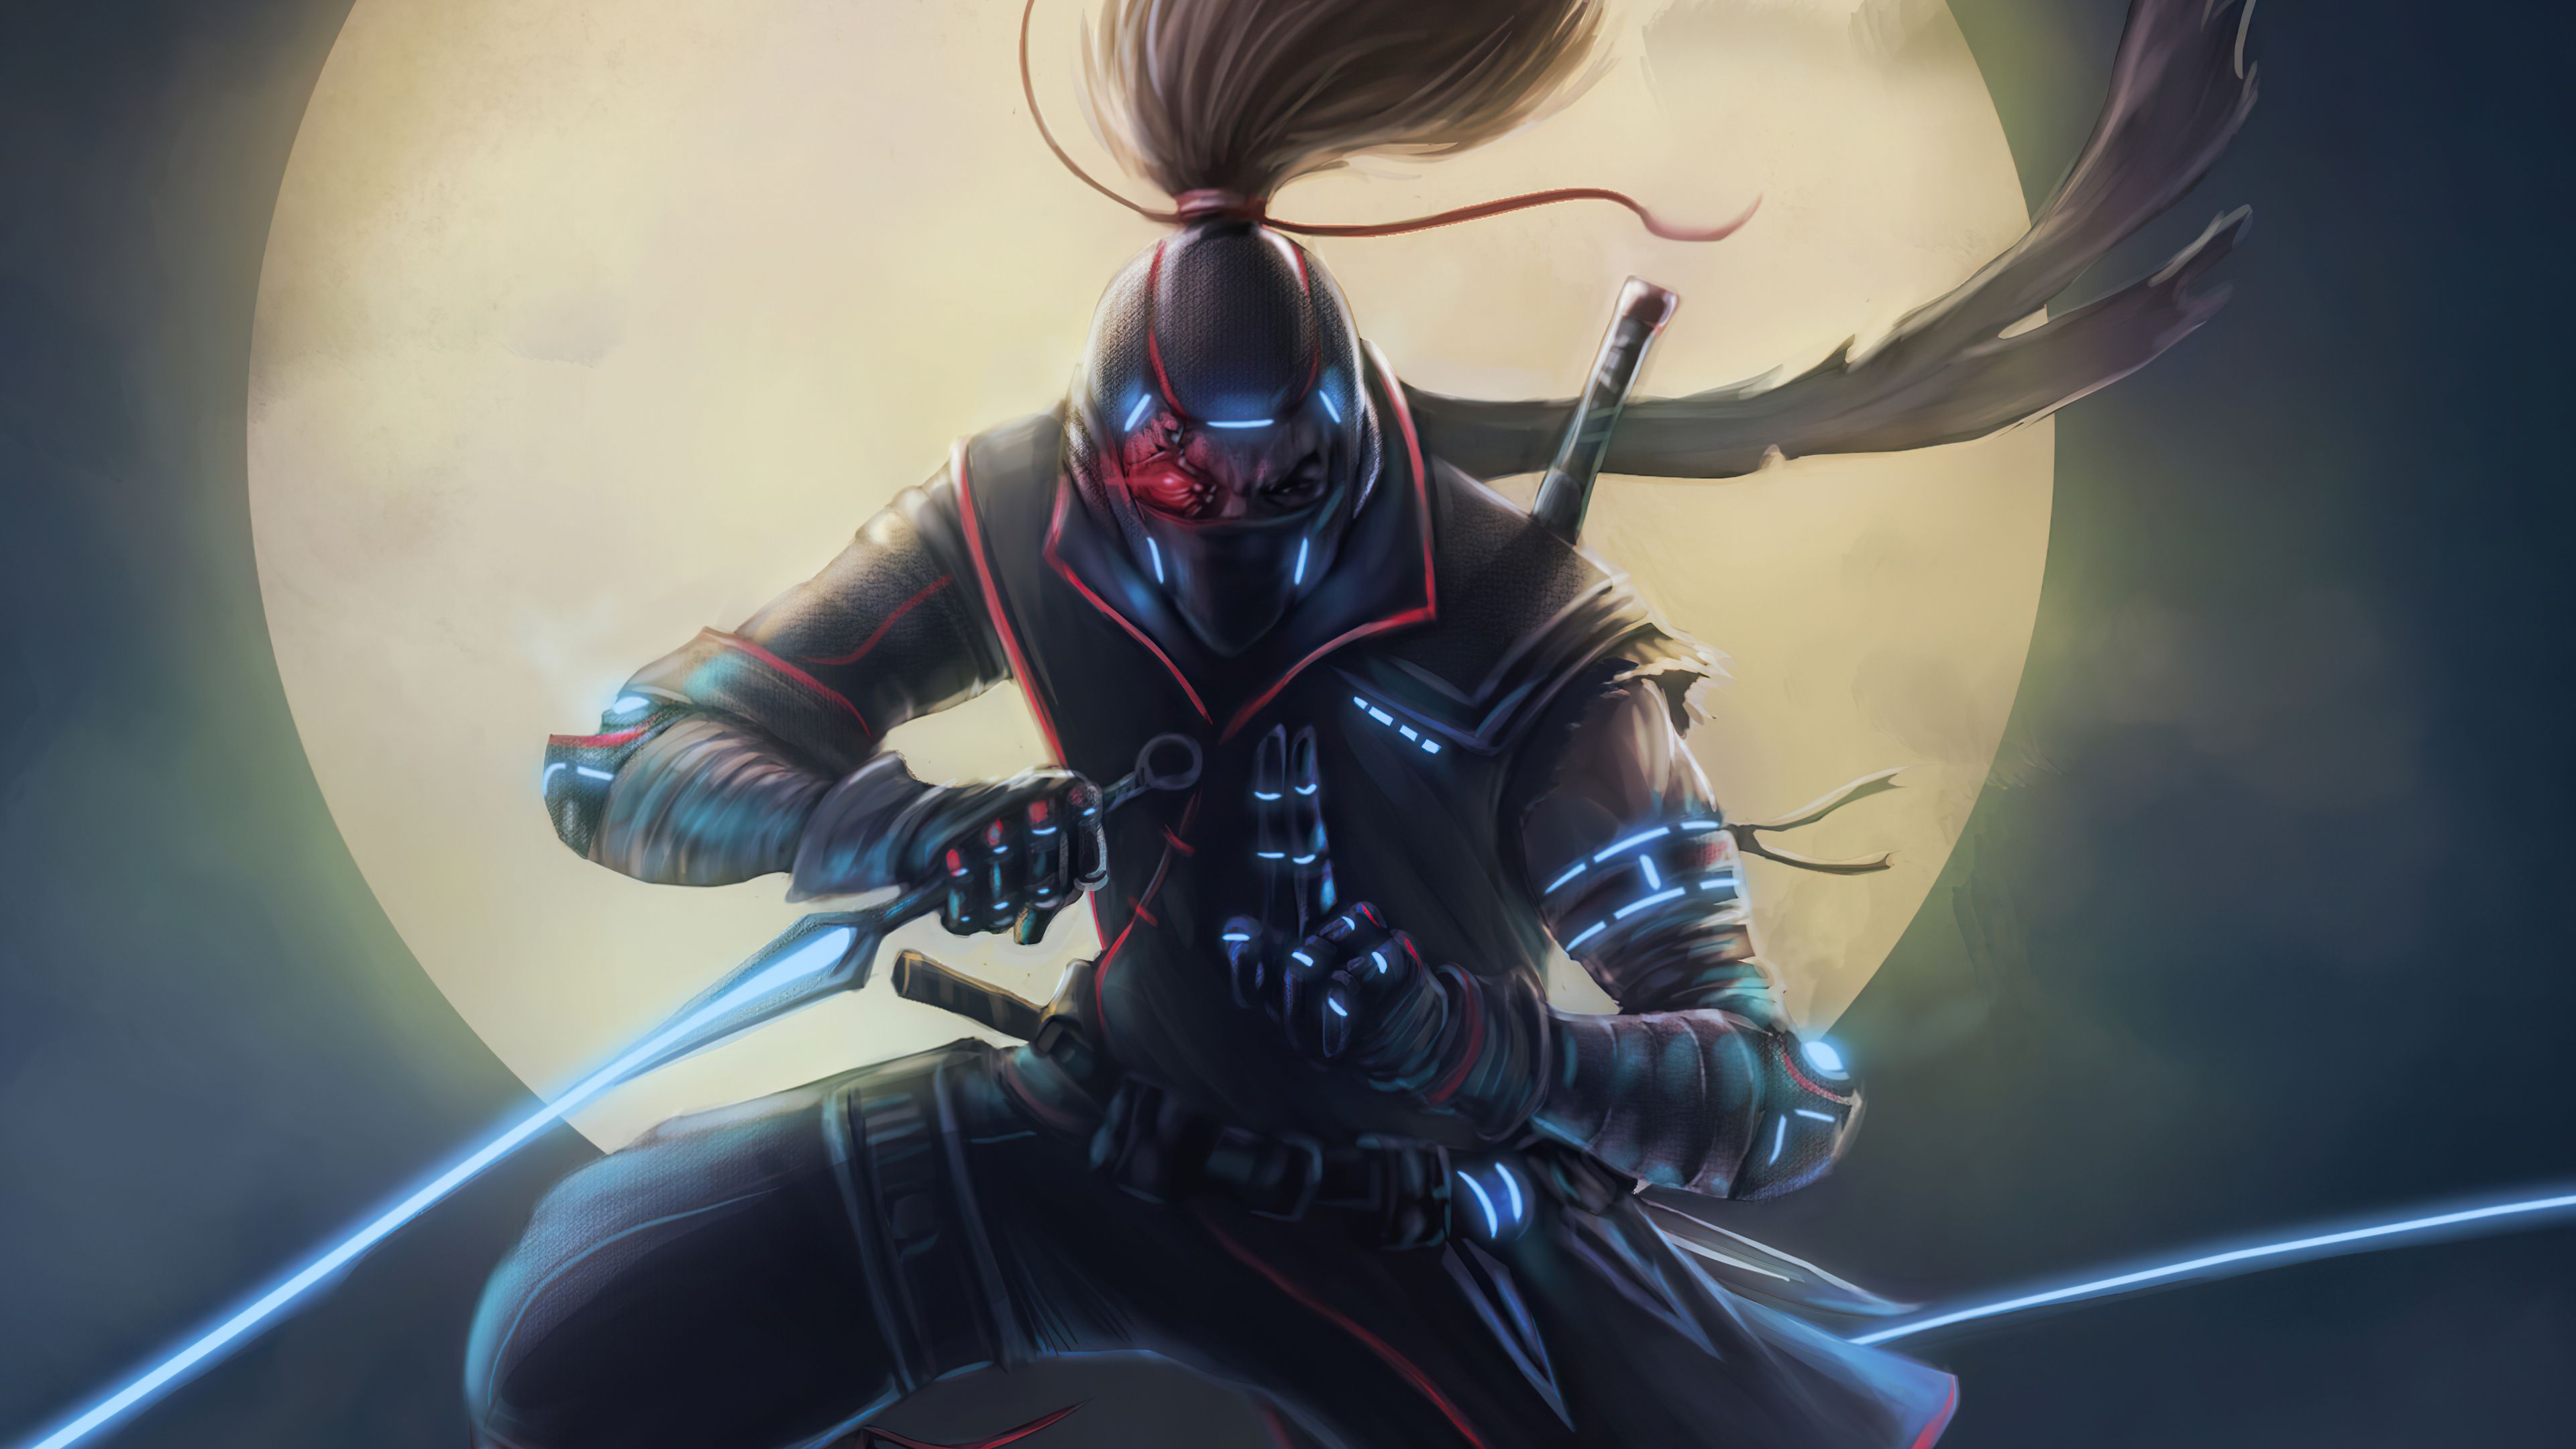 Cyberpunk Ninja Warrior Wallpaper, HD Artist 4K Wallpaper, Image